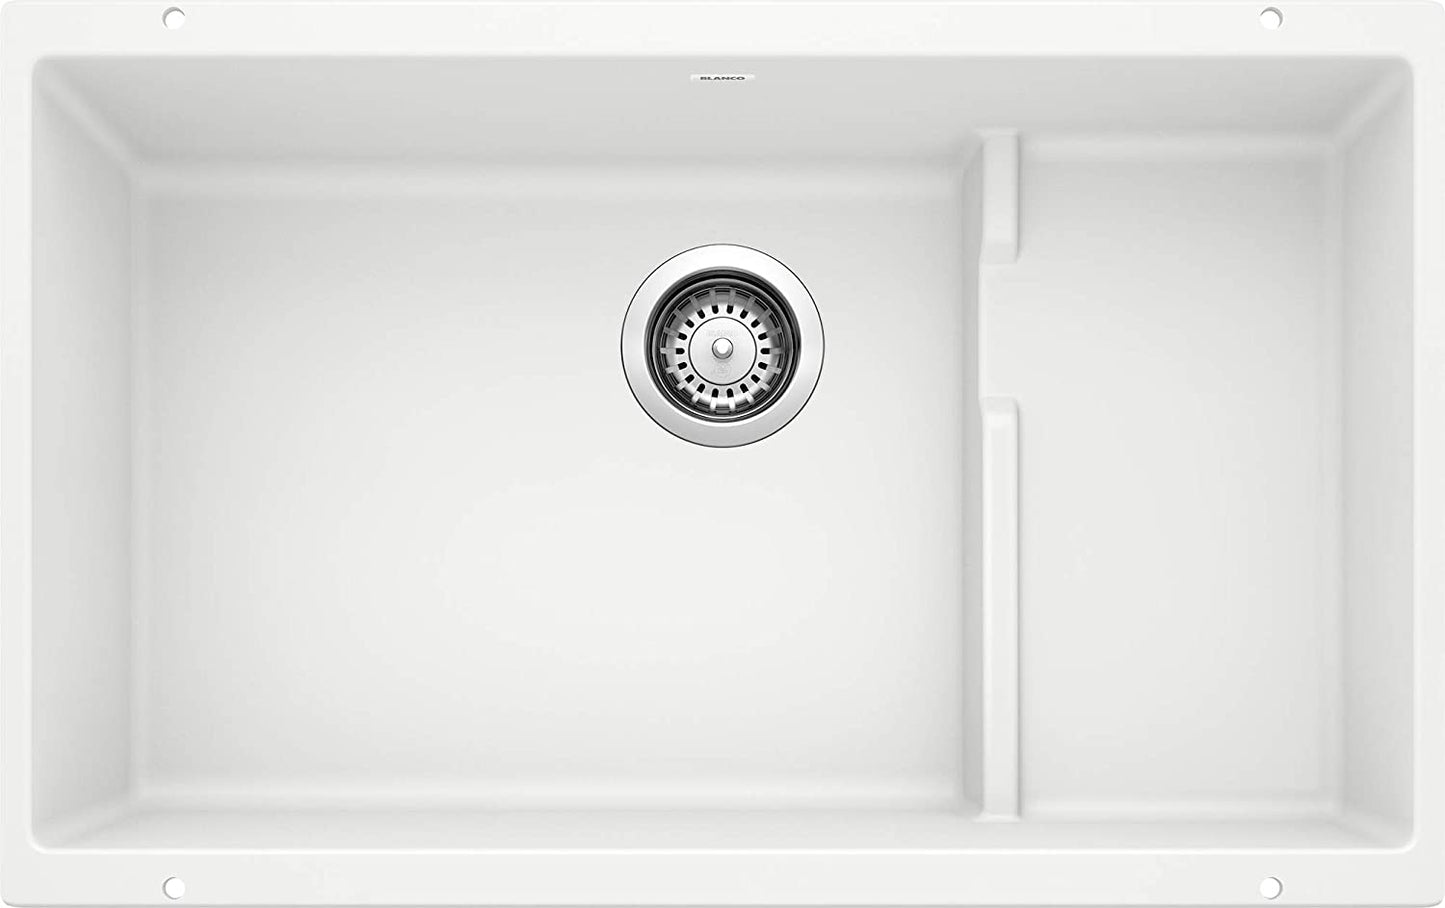 Blanco Precis Cascade 28-3/4" Super Single Undermount Kitchen Sink with Colander